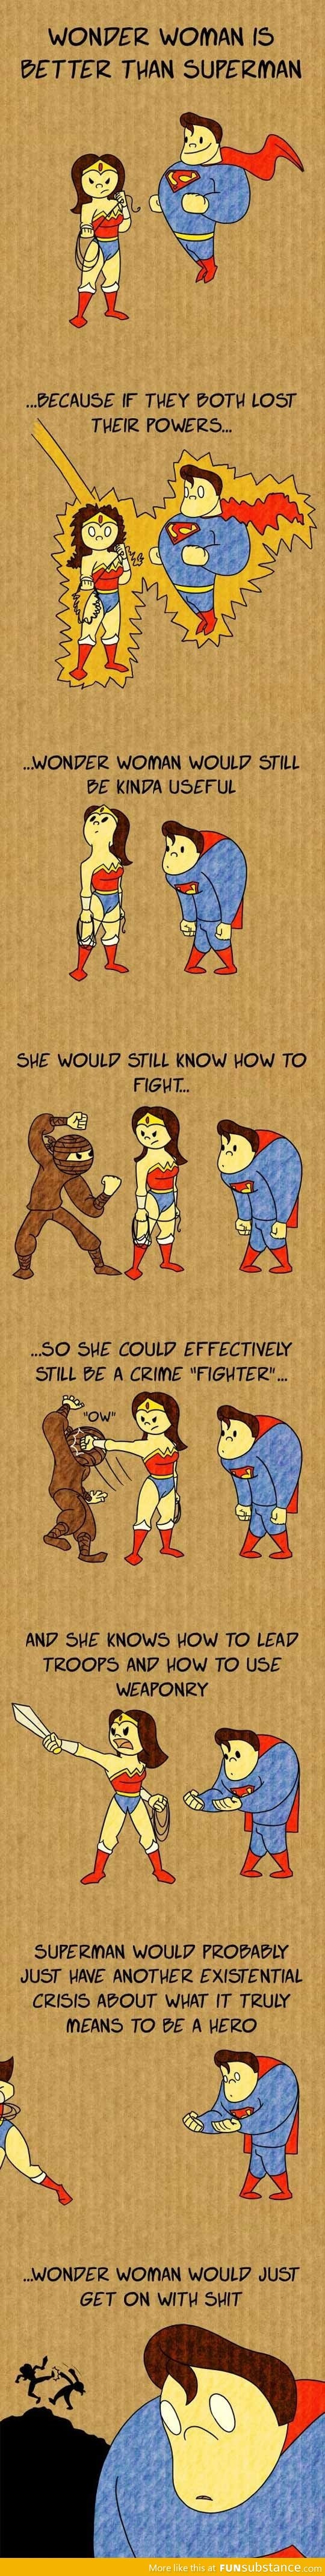 Wonder Woman vs Super Man